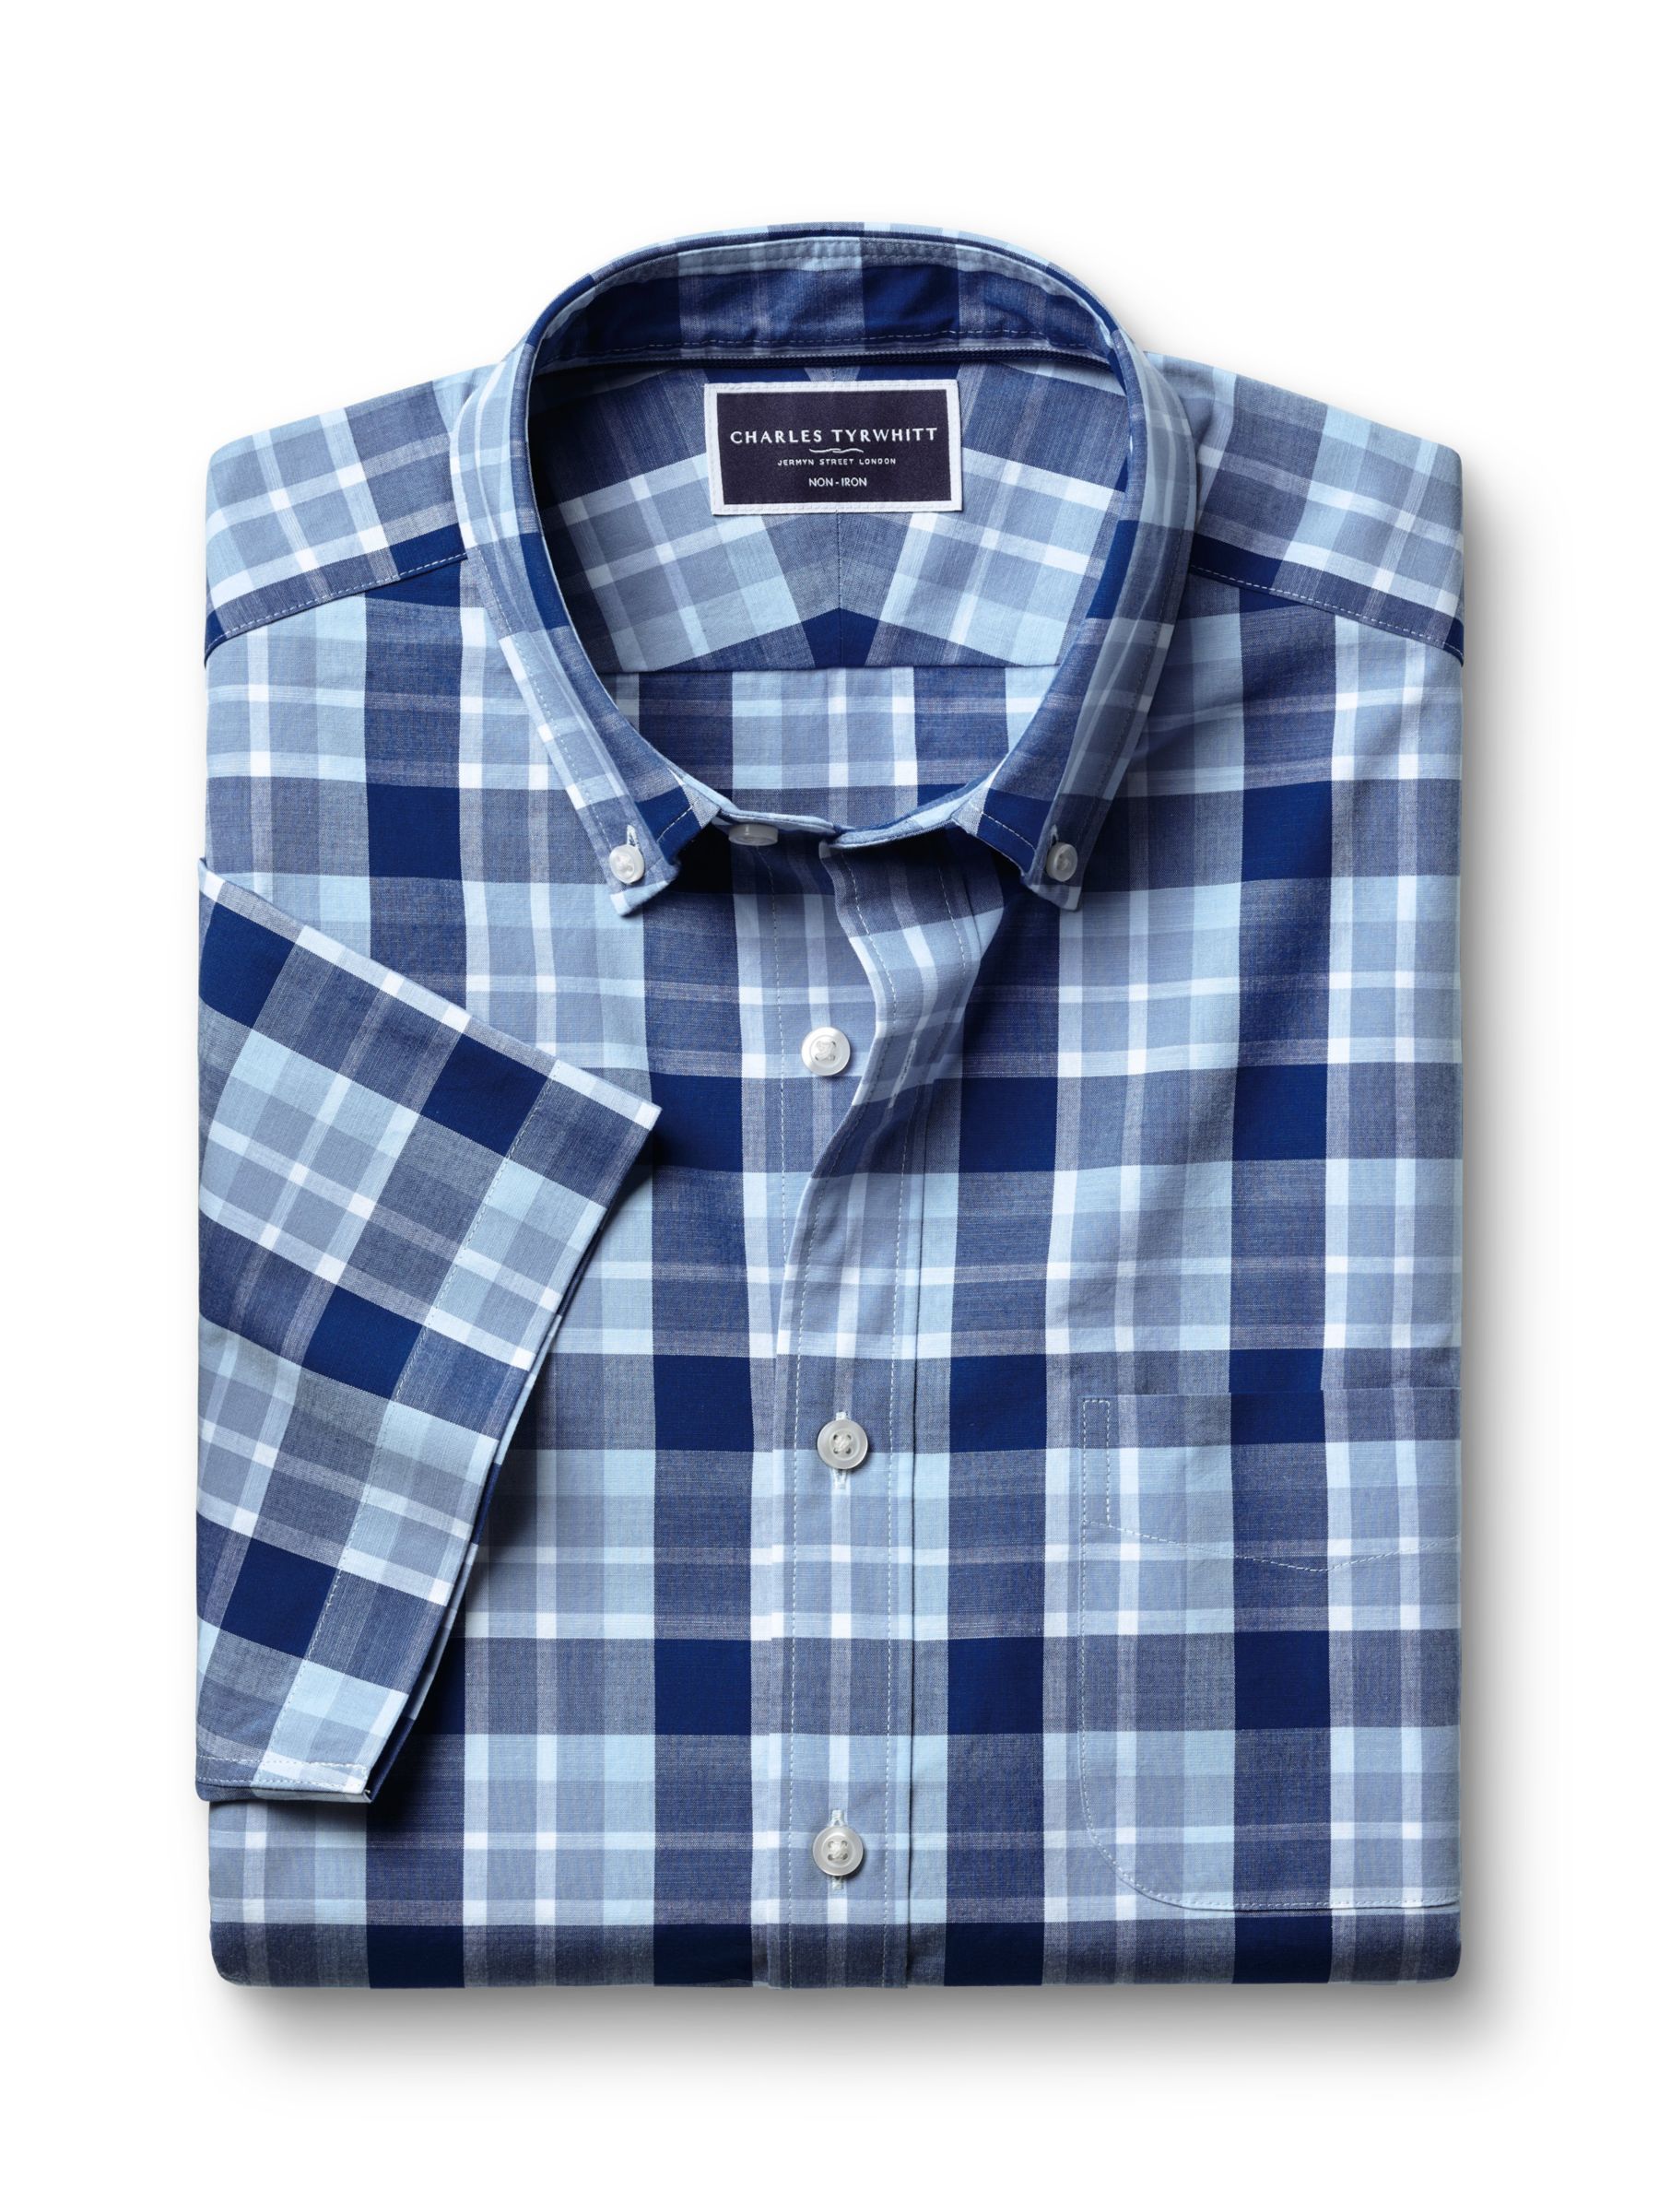 Buy Charles Tyrwhitt Check Short Sleeve Non-Iron Poplin Shirt, Royal Blue Online at johnlewis.com